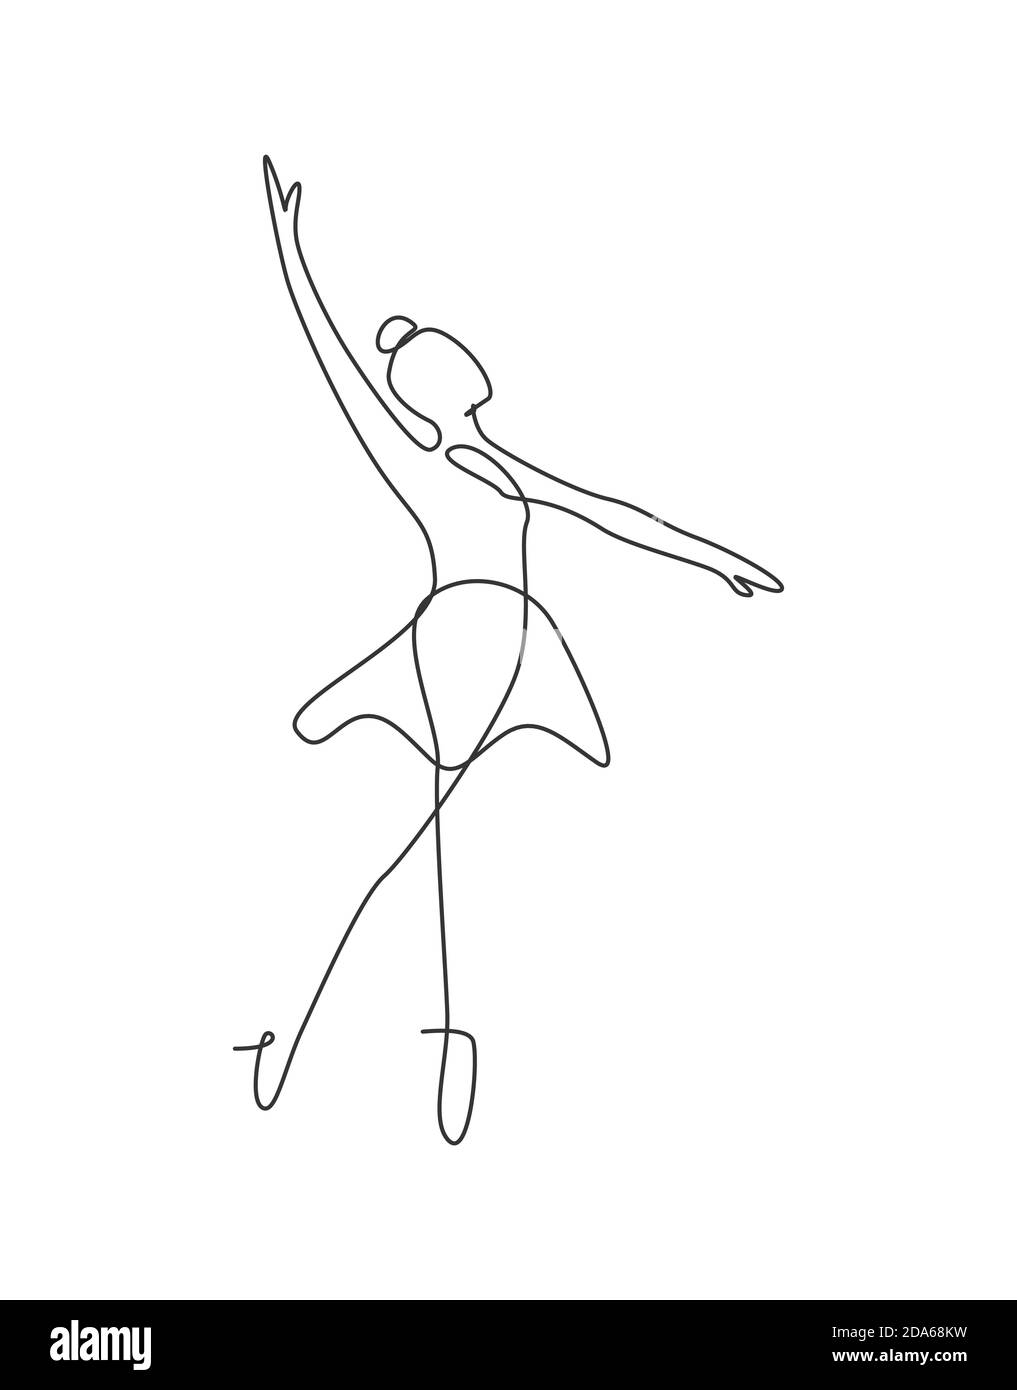 Bailarina de dibujo de línea continua única en estilo de danza de  movimiento de ballet. Belleza minimalista bailarín concepto logo,  escandinavo cartel de arte Imagen Vector de stock - Alamy